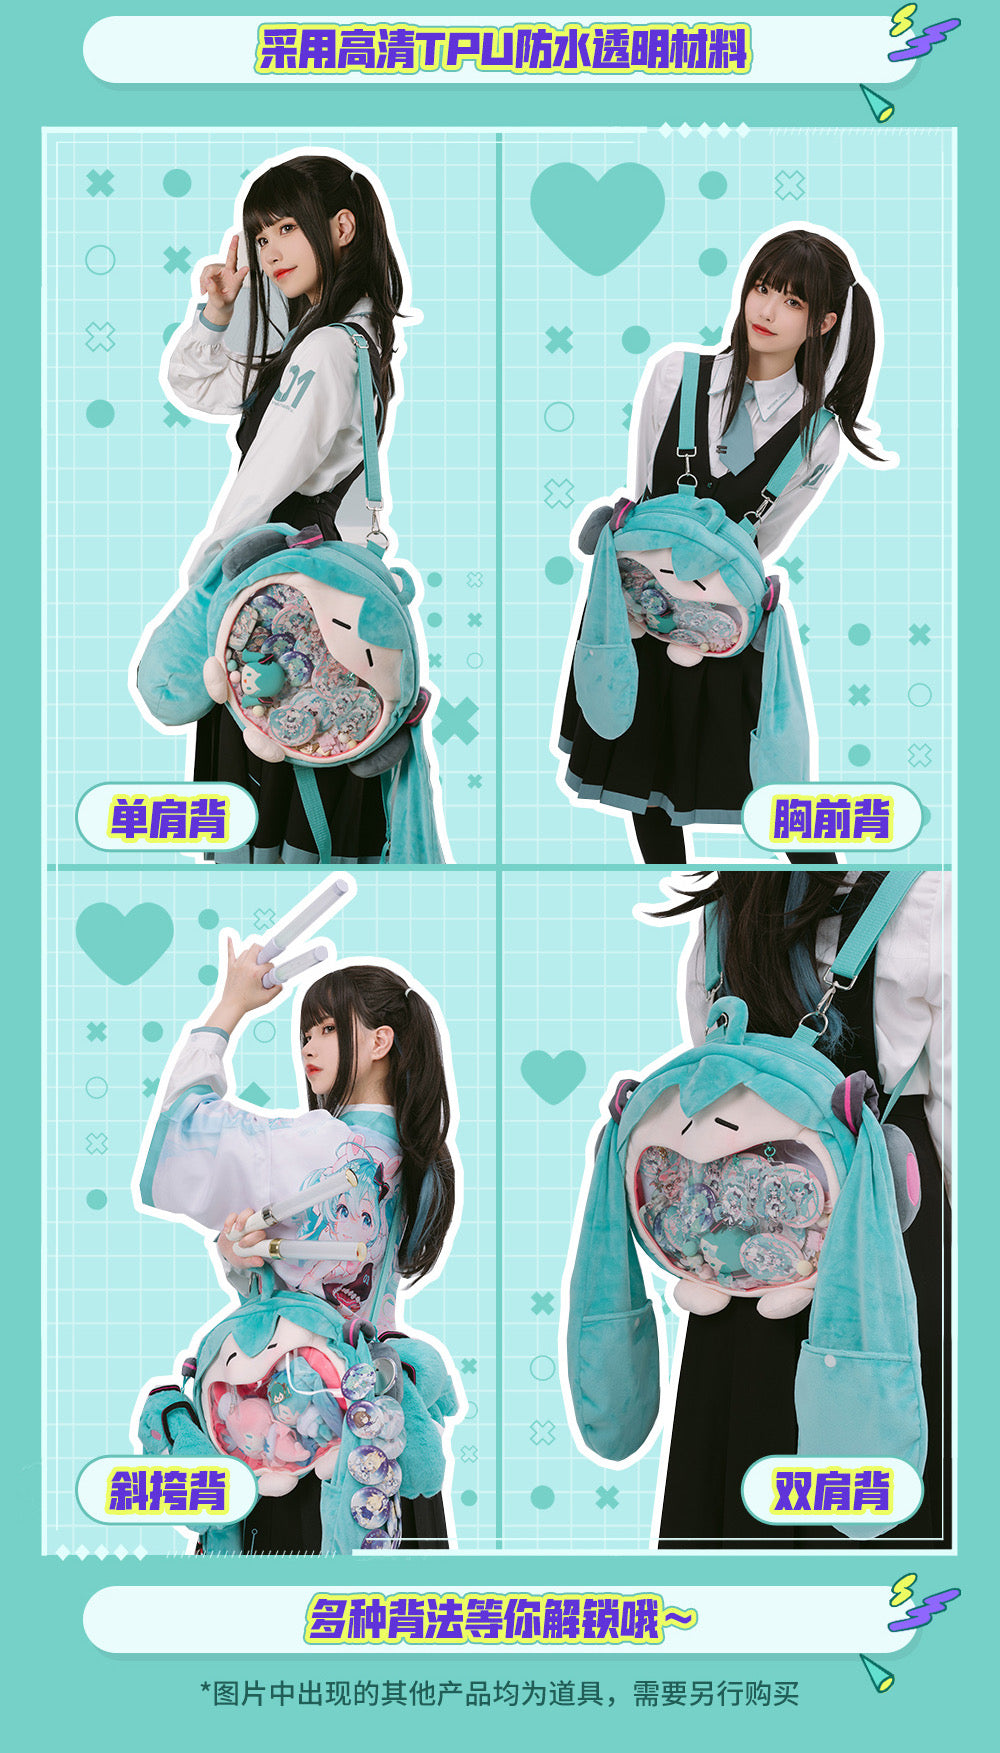 (Pre-Order) Hatsune Miku - Plush Ita Bag